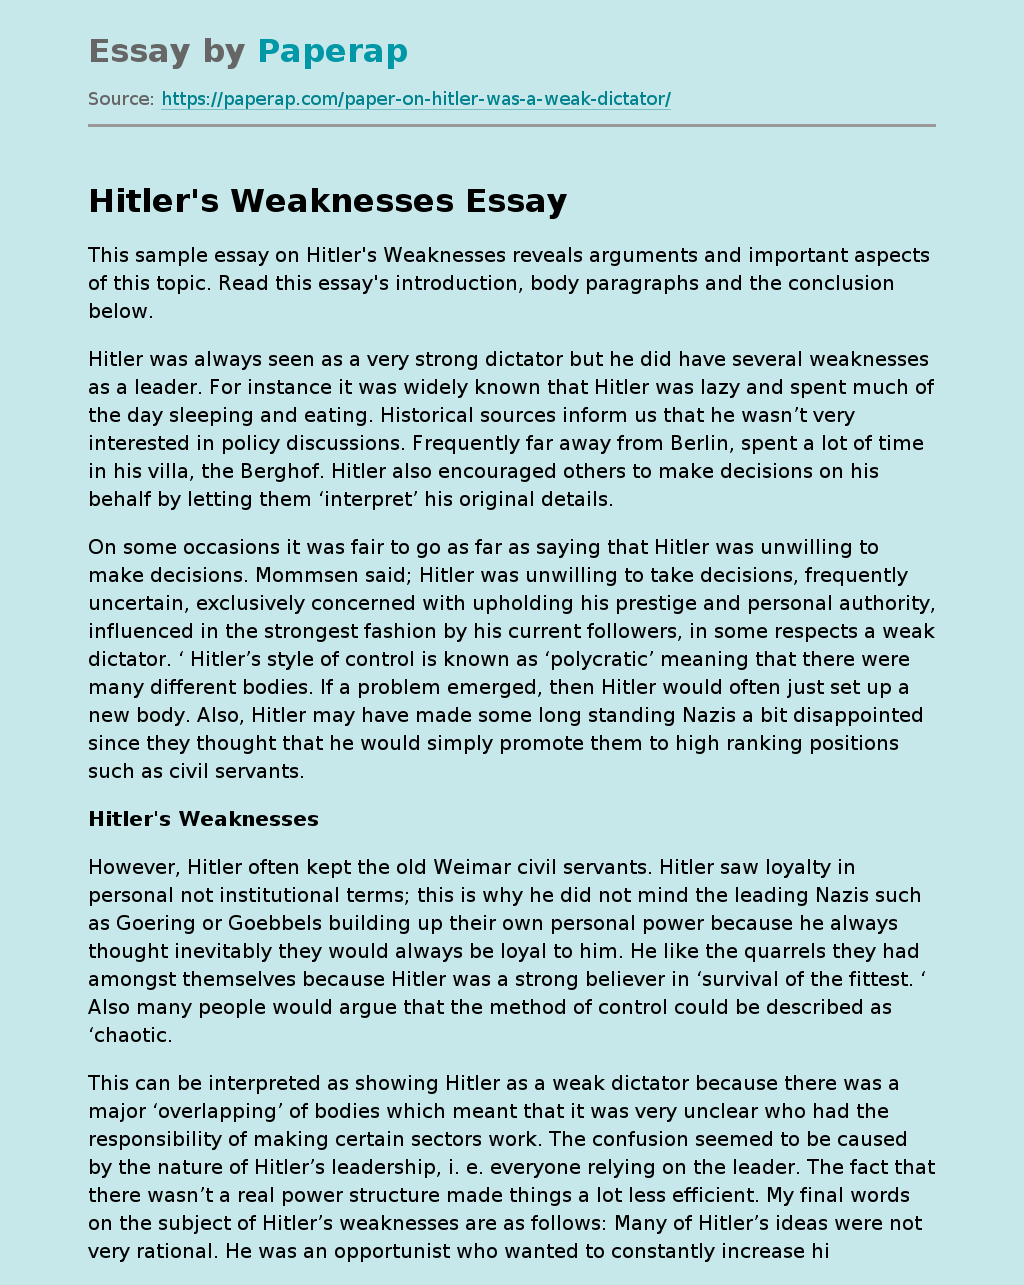 Several Weaknesses of Hitler